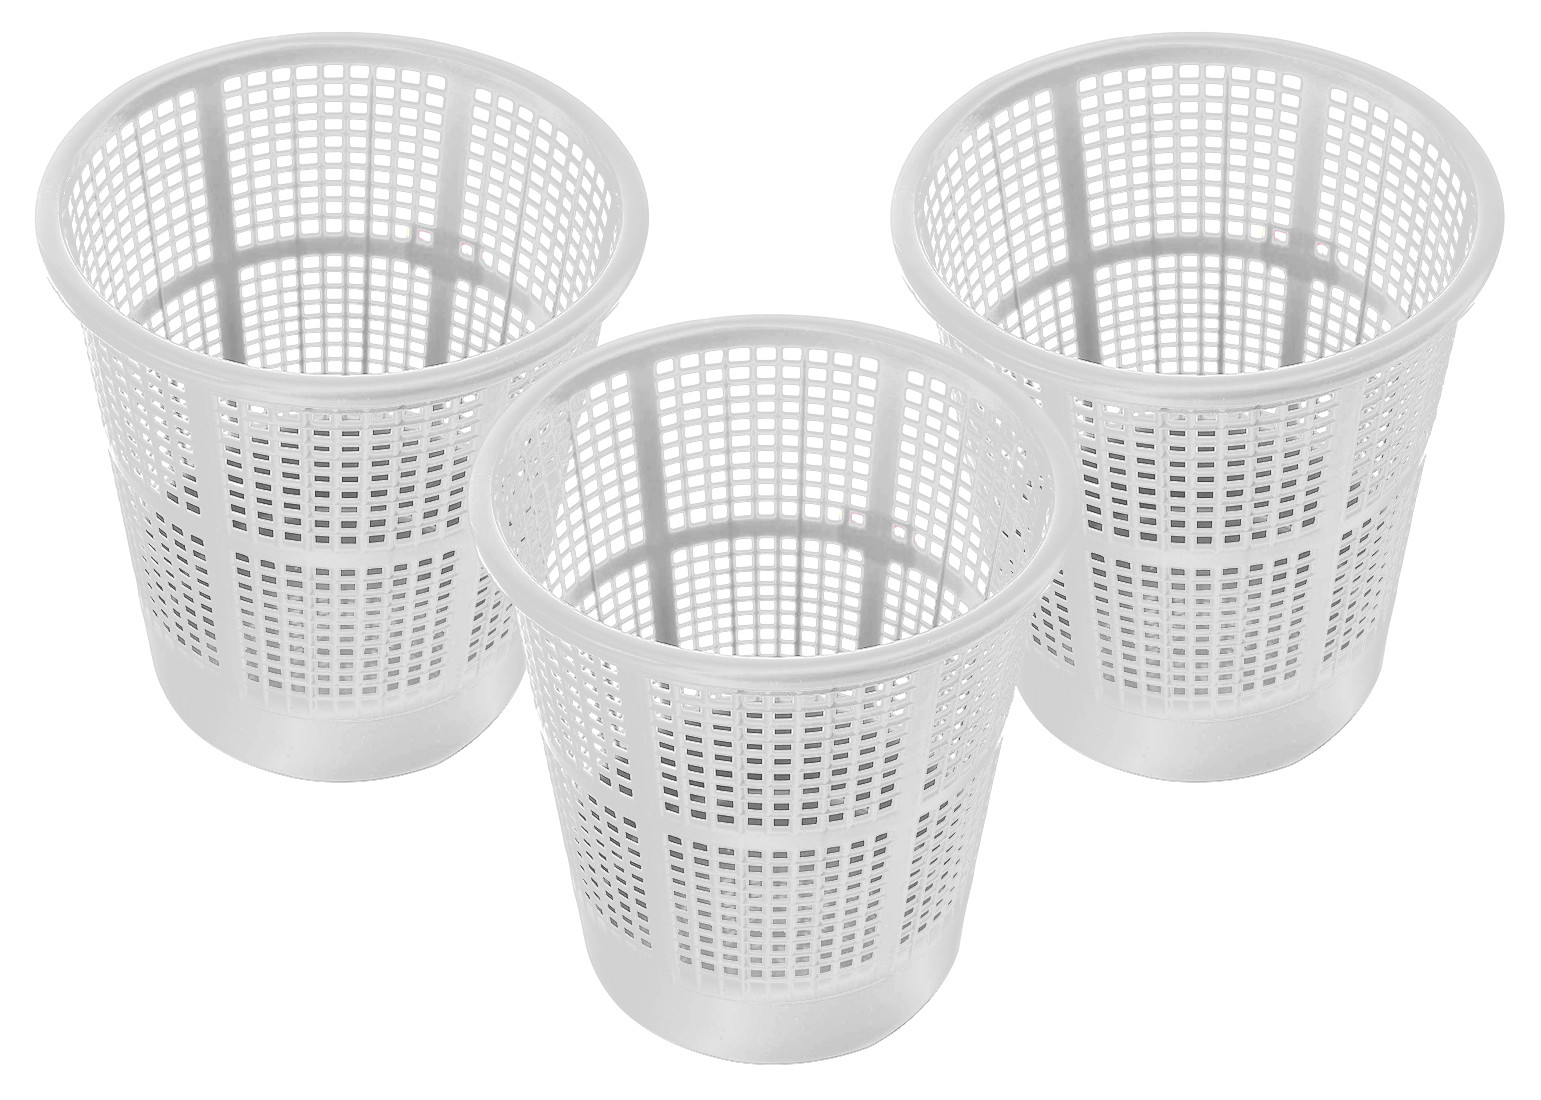 Kuber Industries Mesh Design Plastic Dustbin, Garbage Bin For Home, Kitchen, Office, 5Ltr. (White)-47KM0781